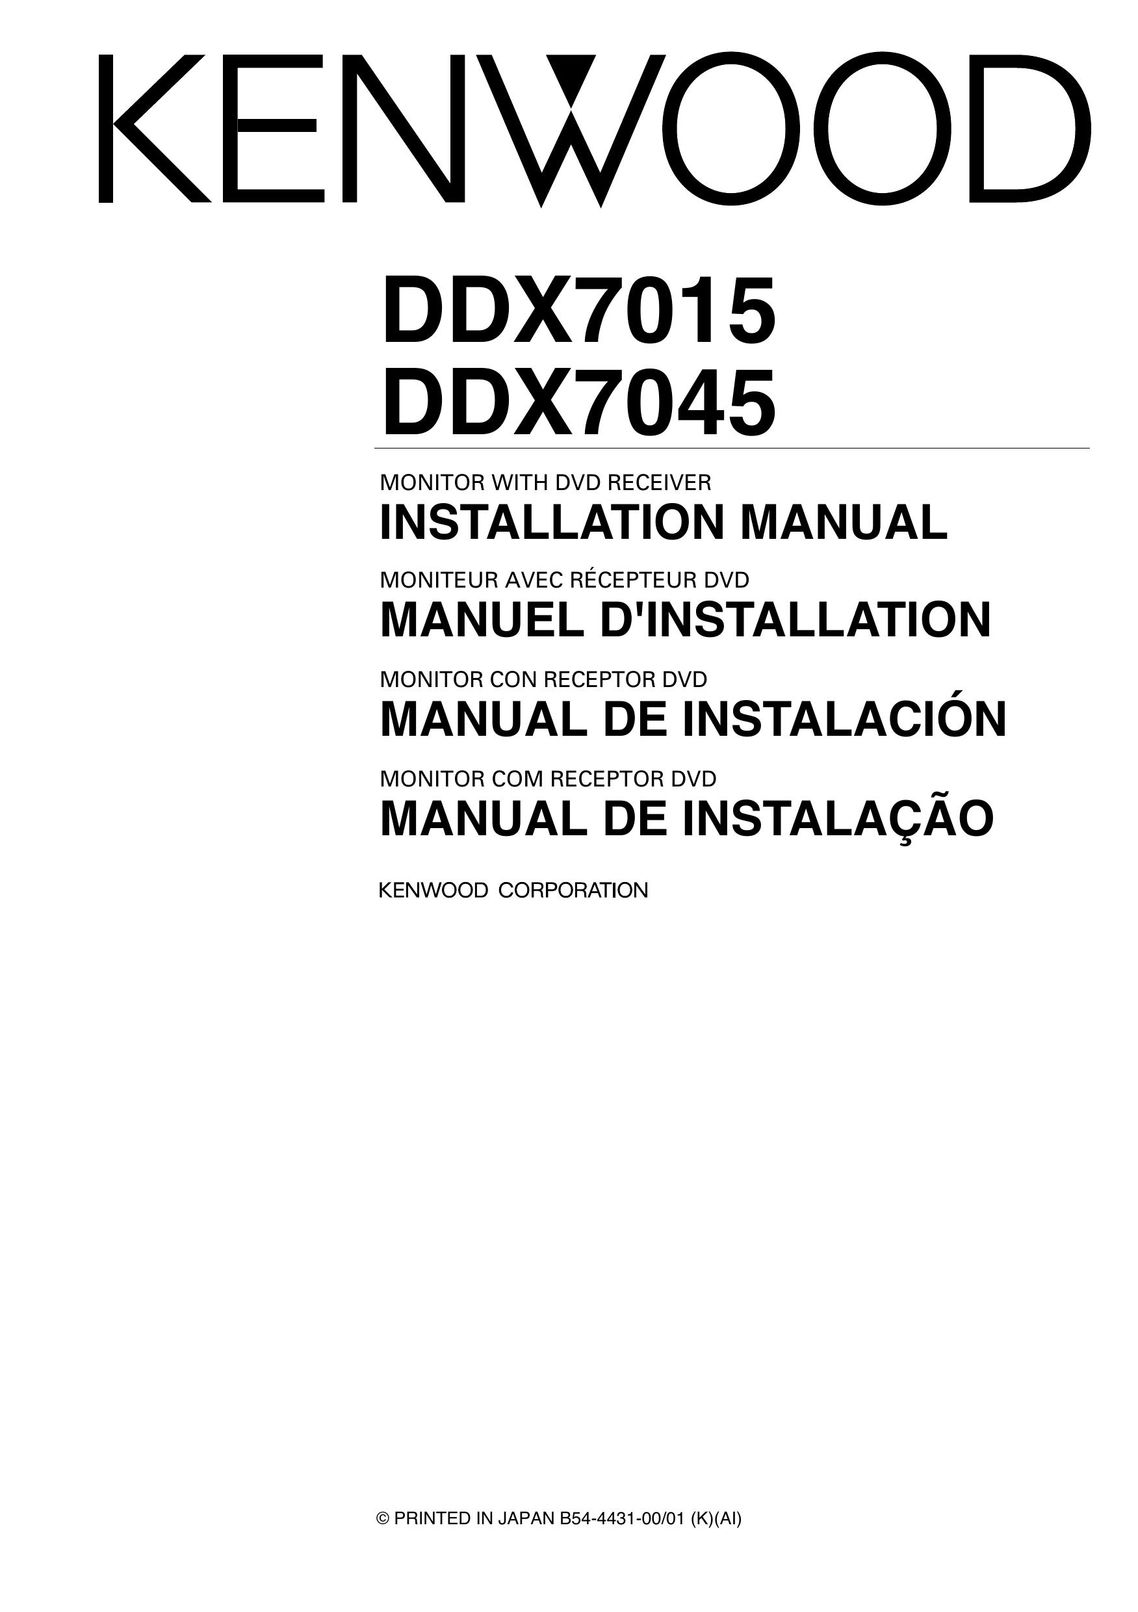 Kenwood DDX7015 Car Stereo System User Manual